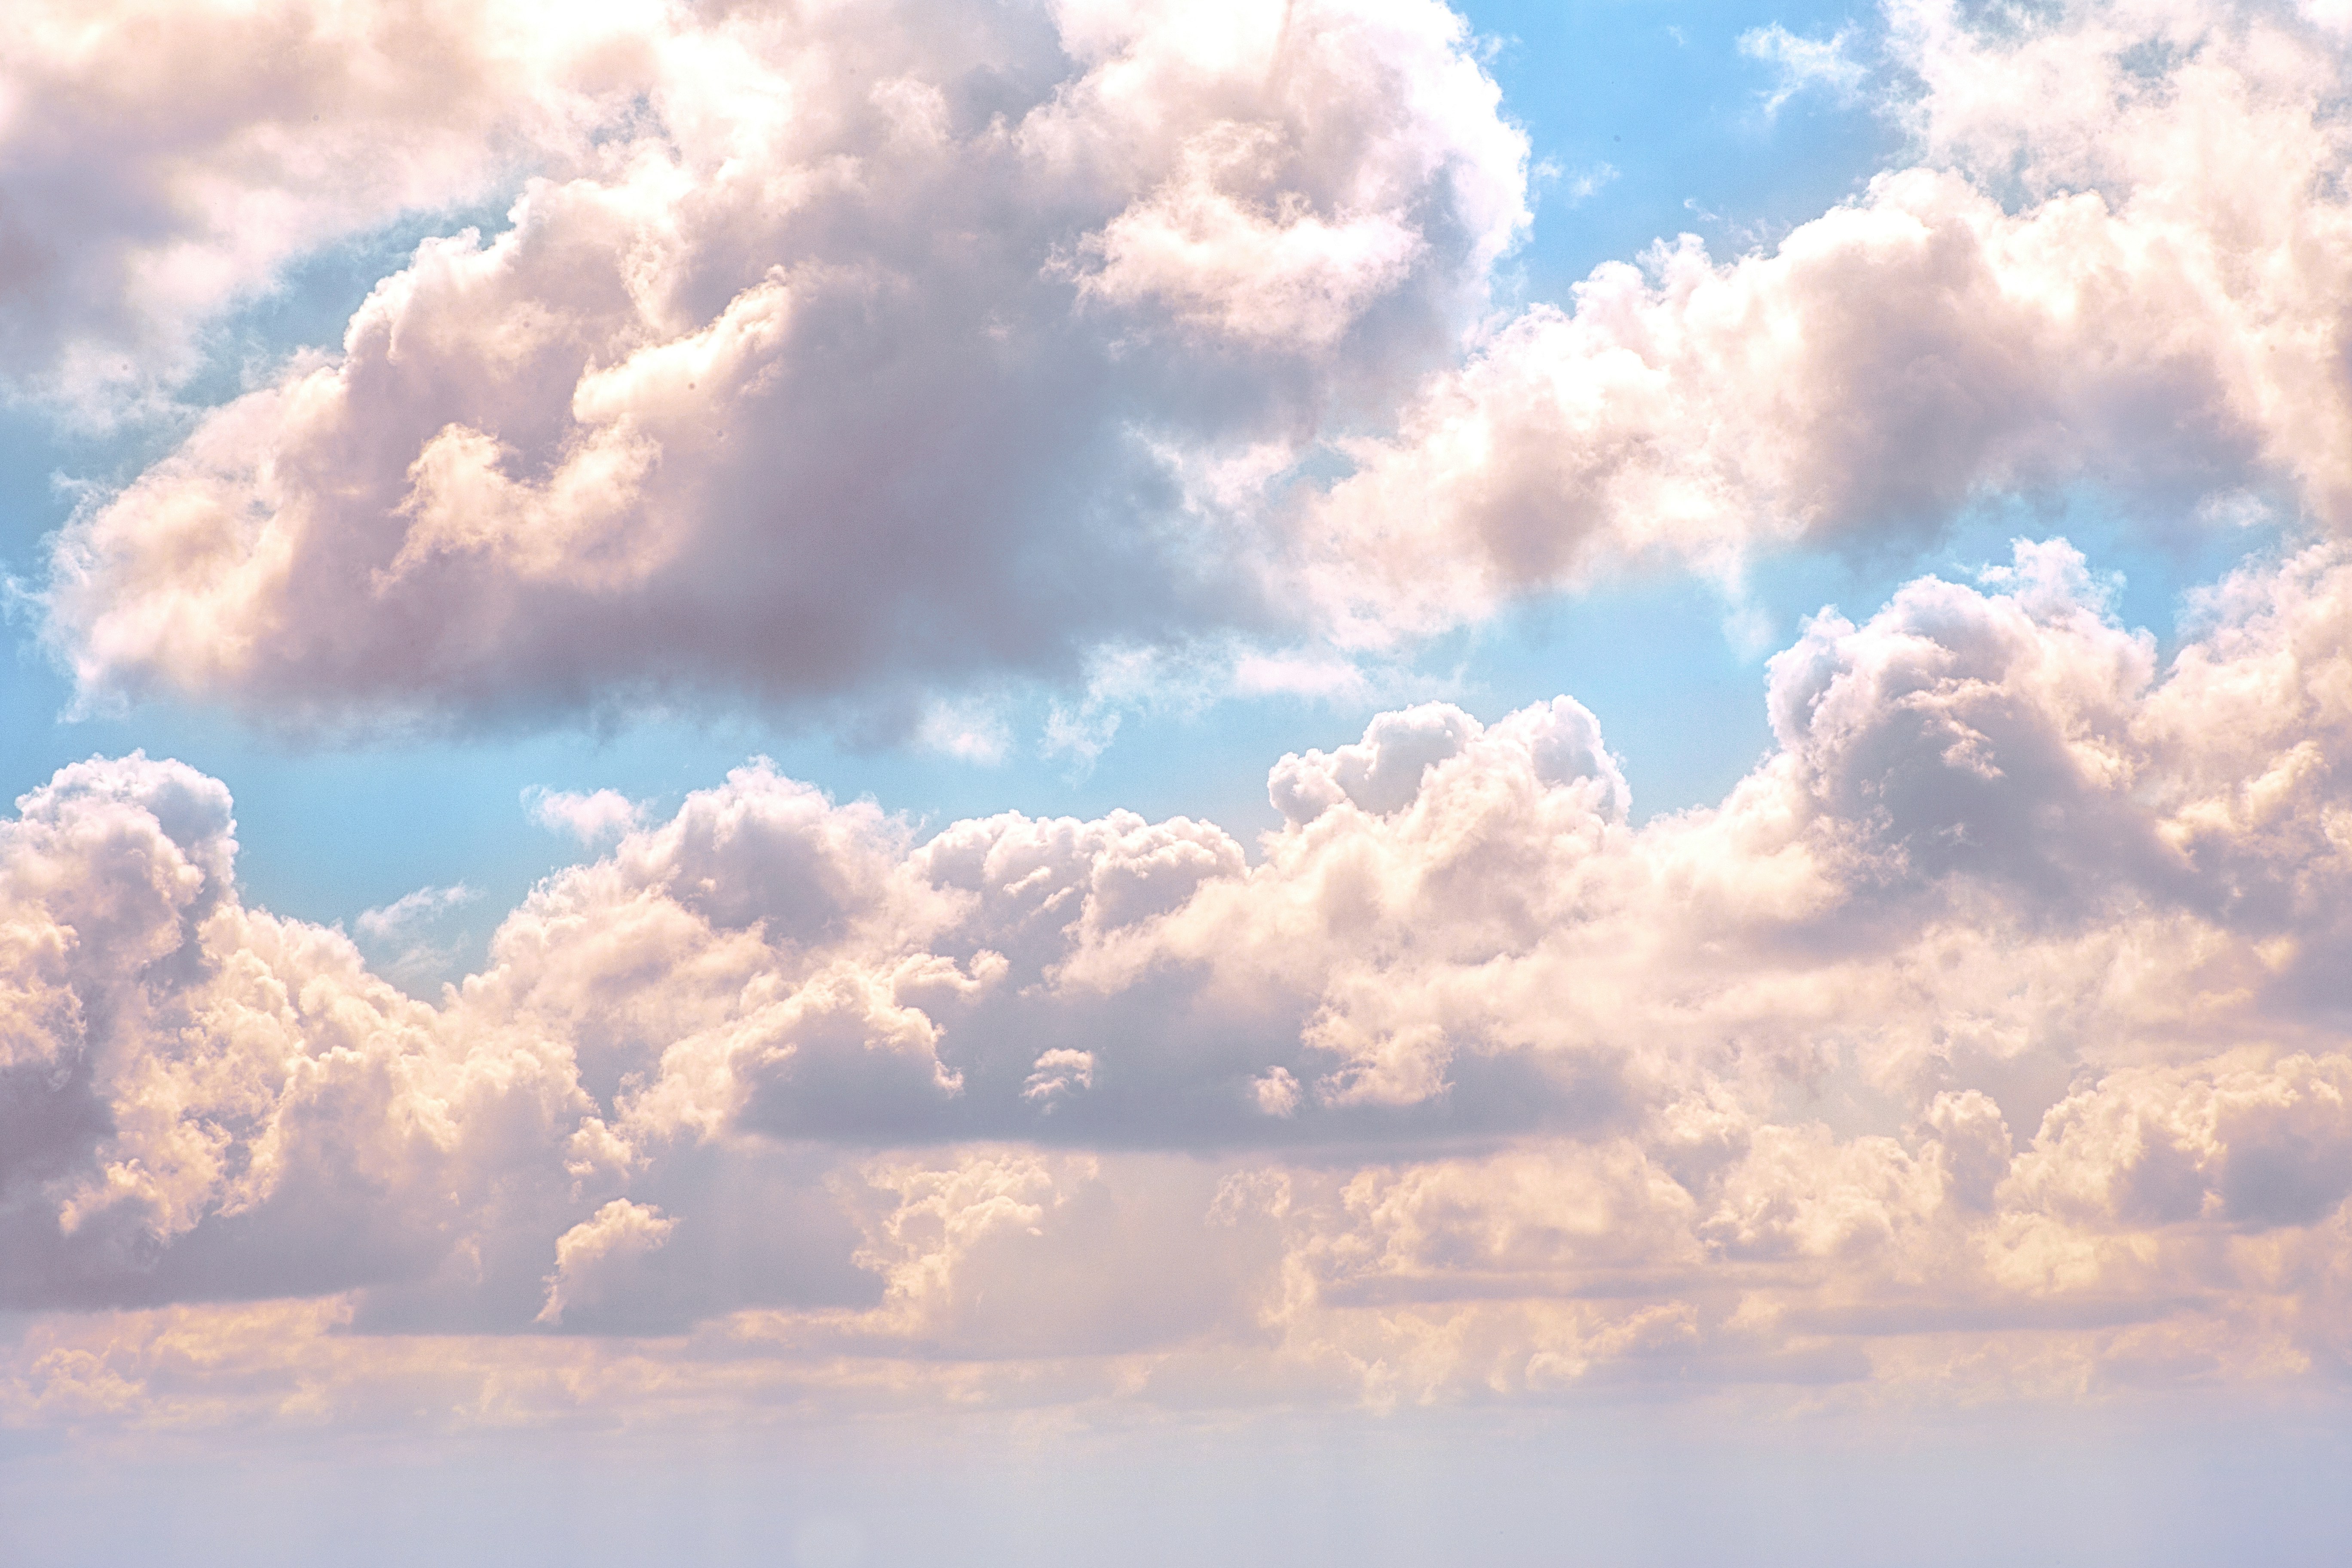 Download Best 100 Cloud Pictures Hq Download Free Images On Unsplash PSD Mockup Templates